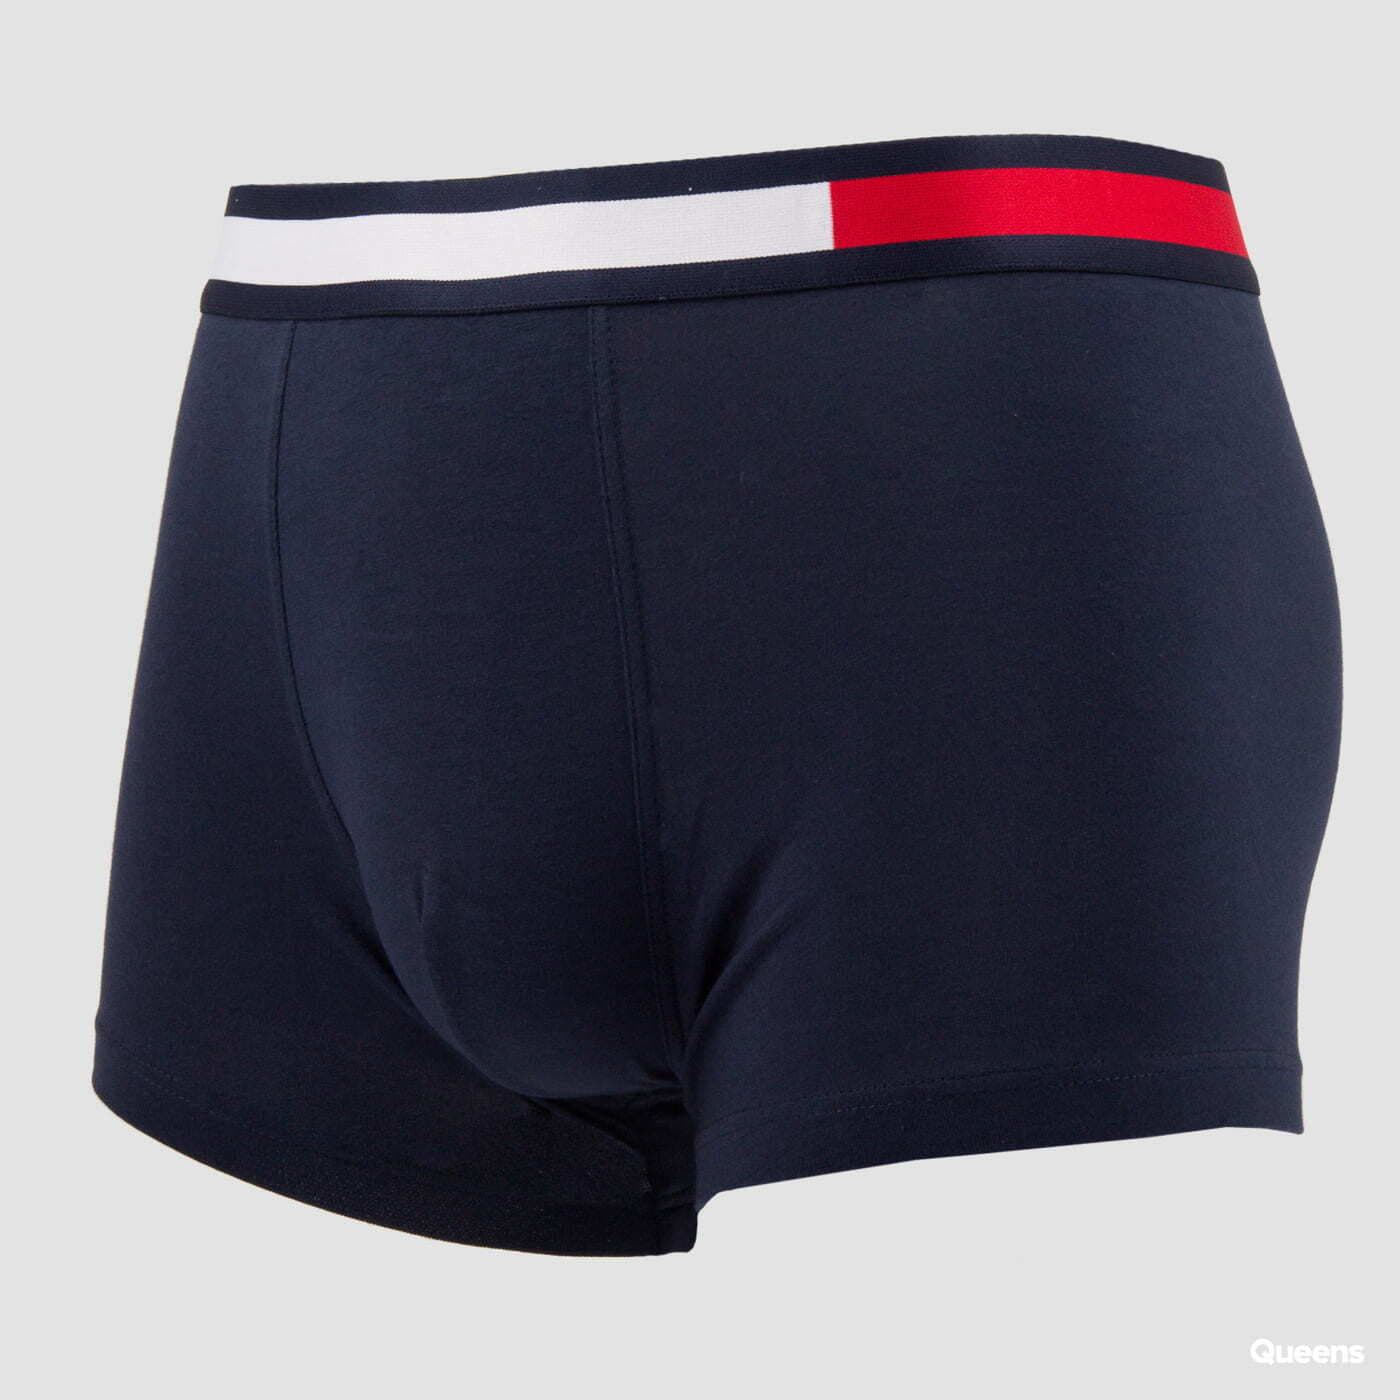 Boxer shorts Tommy Hilfiger Color Block Trunk Navy